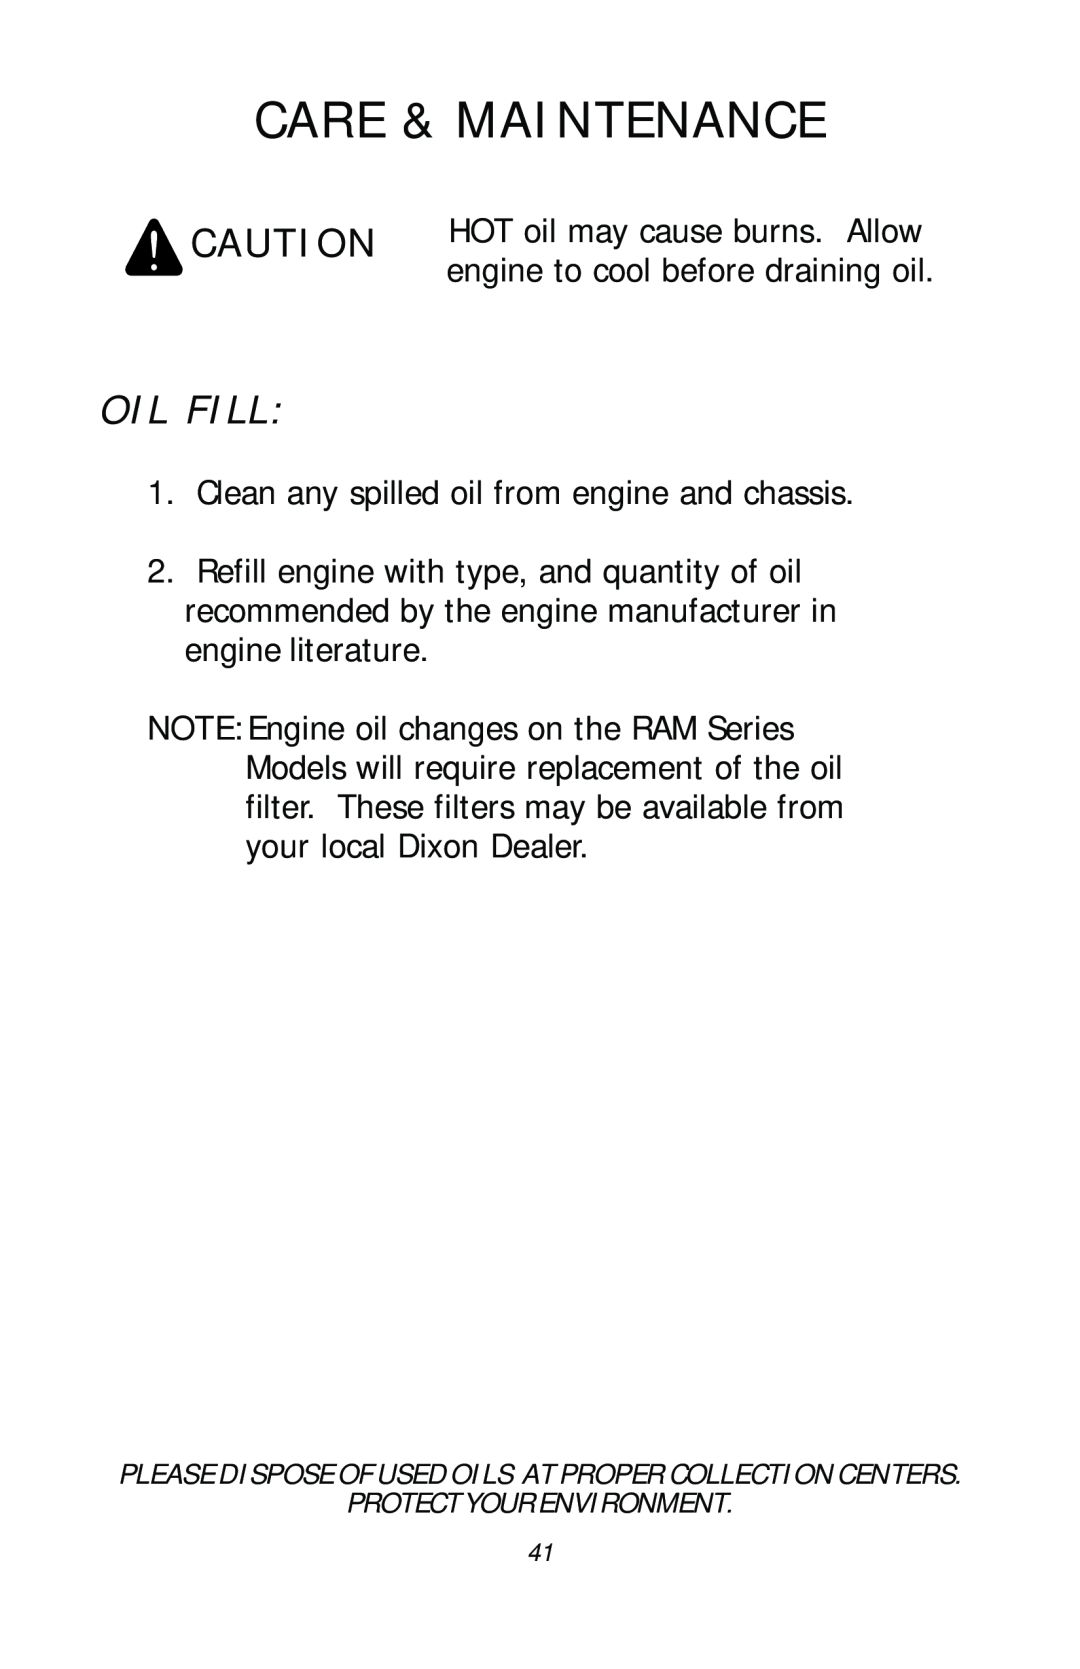 Dixon 17411-1103, ZTR RAM 50 manual Oil Fill, Care & Maintenance 